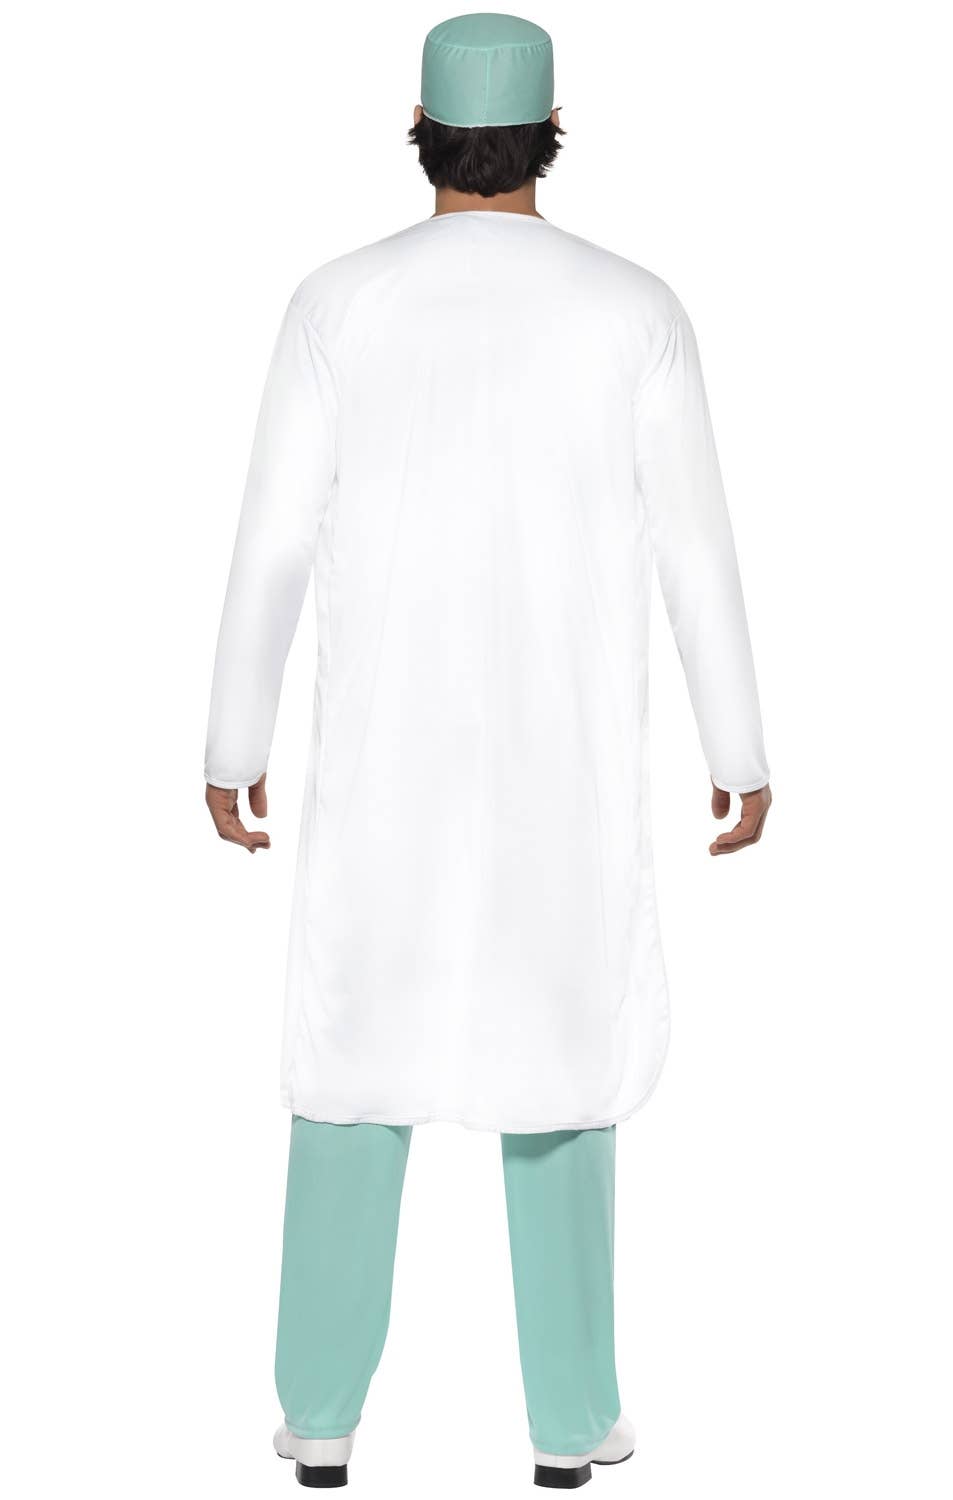 Mens Scrubs And Lab Coat Fancy Dress Doctor Costume - Back Image